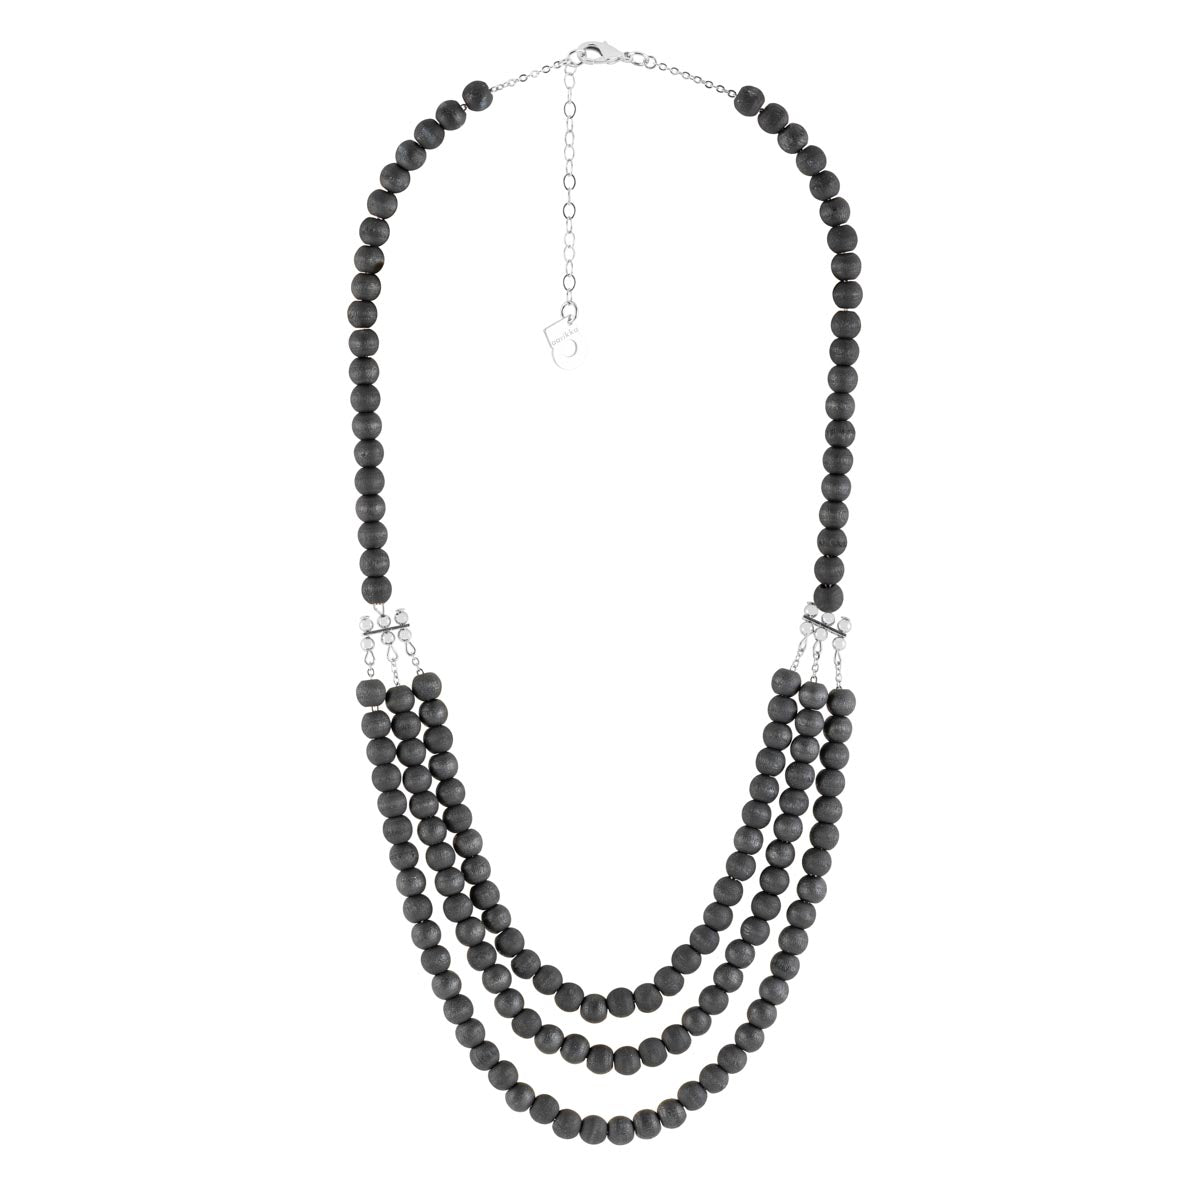 Josefiina necklace, black